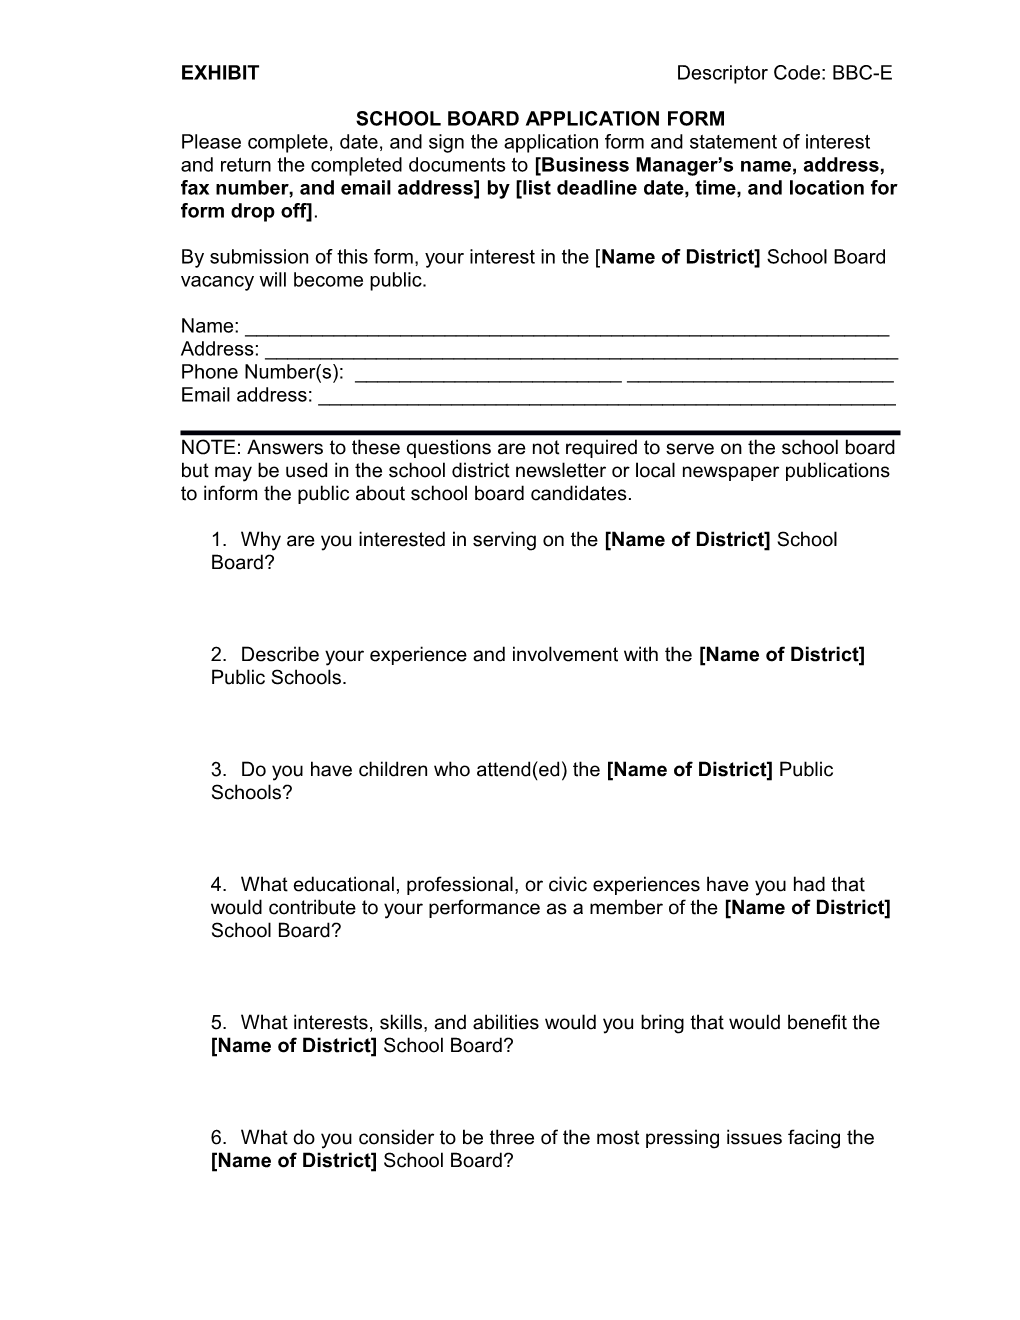 School Board Application Form